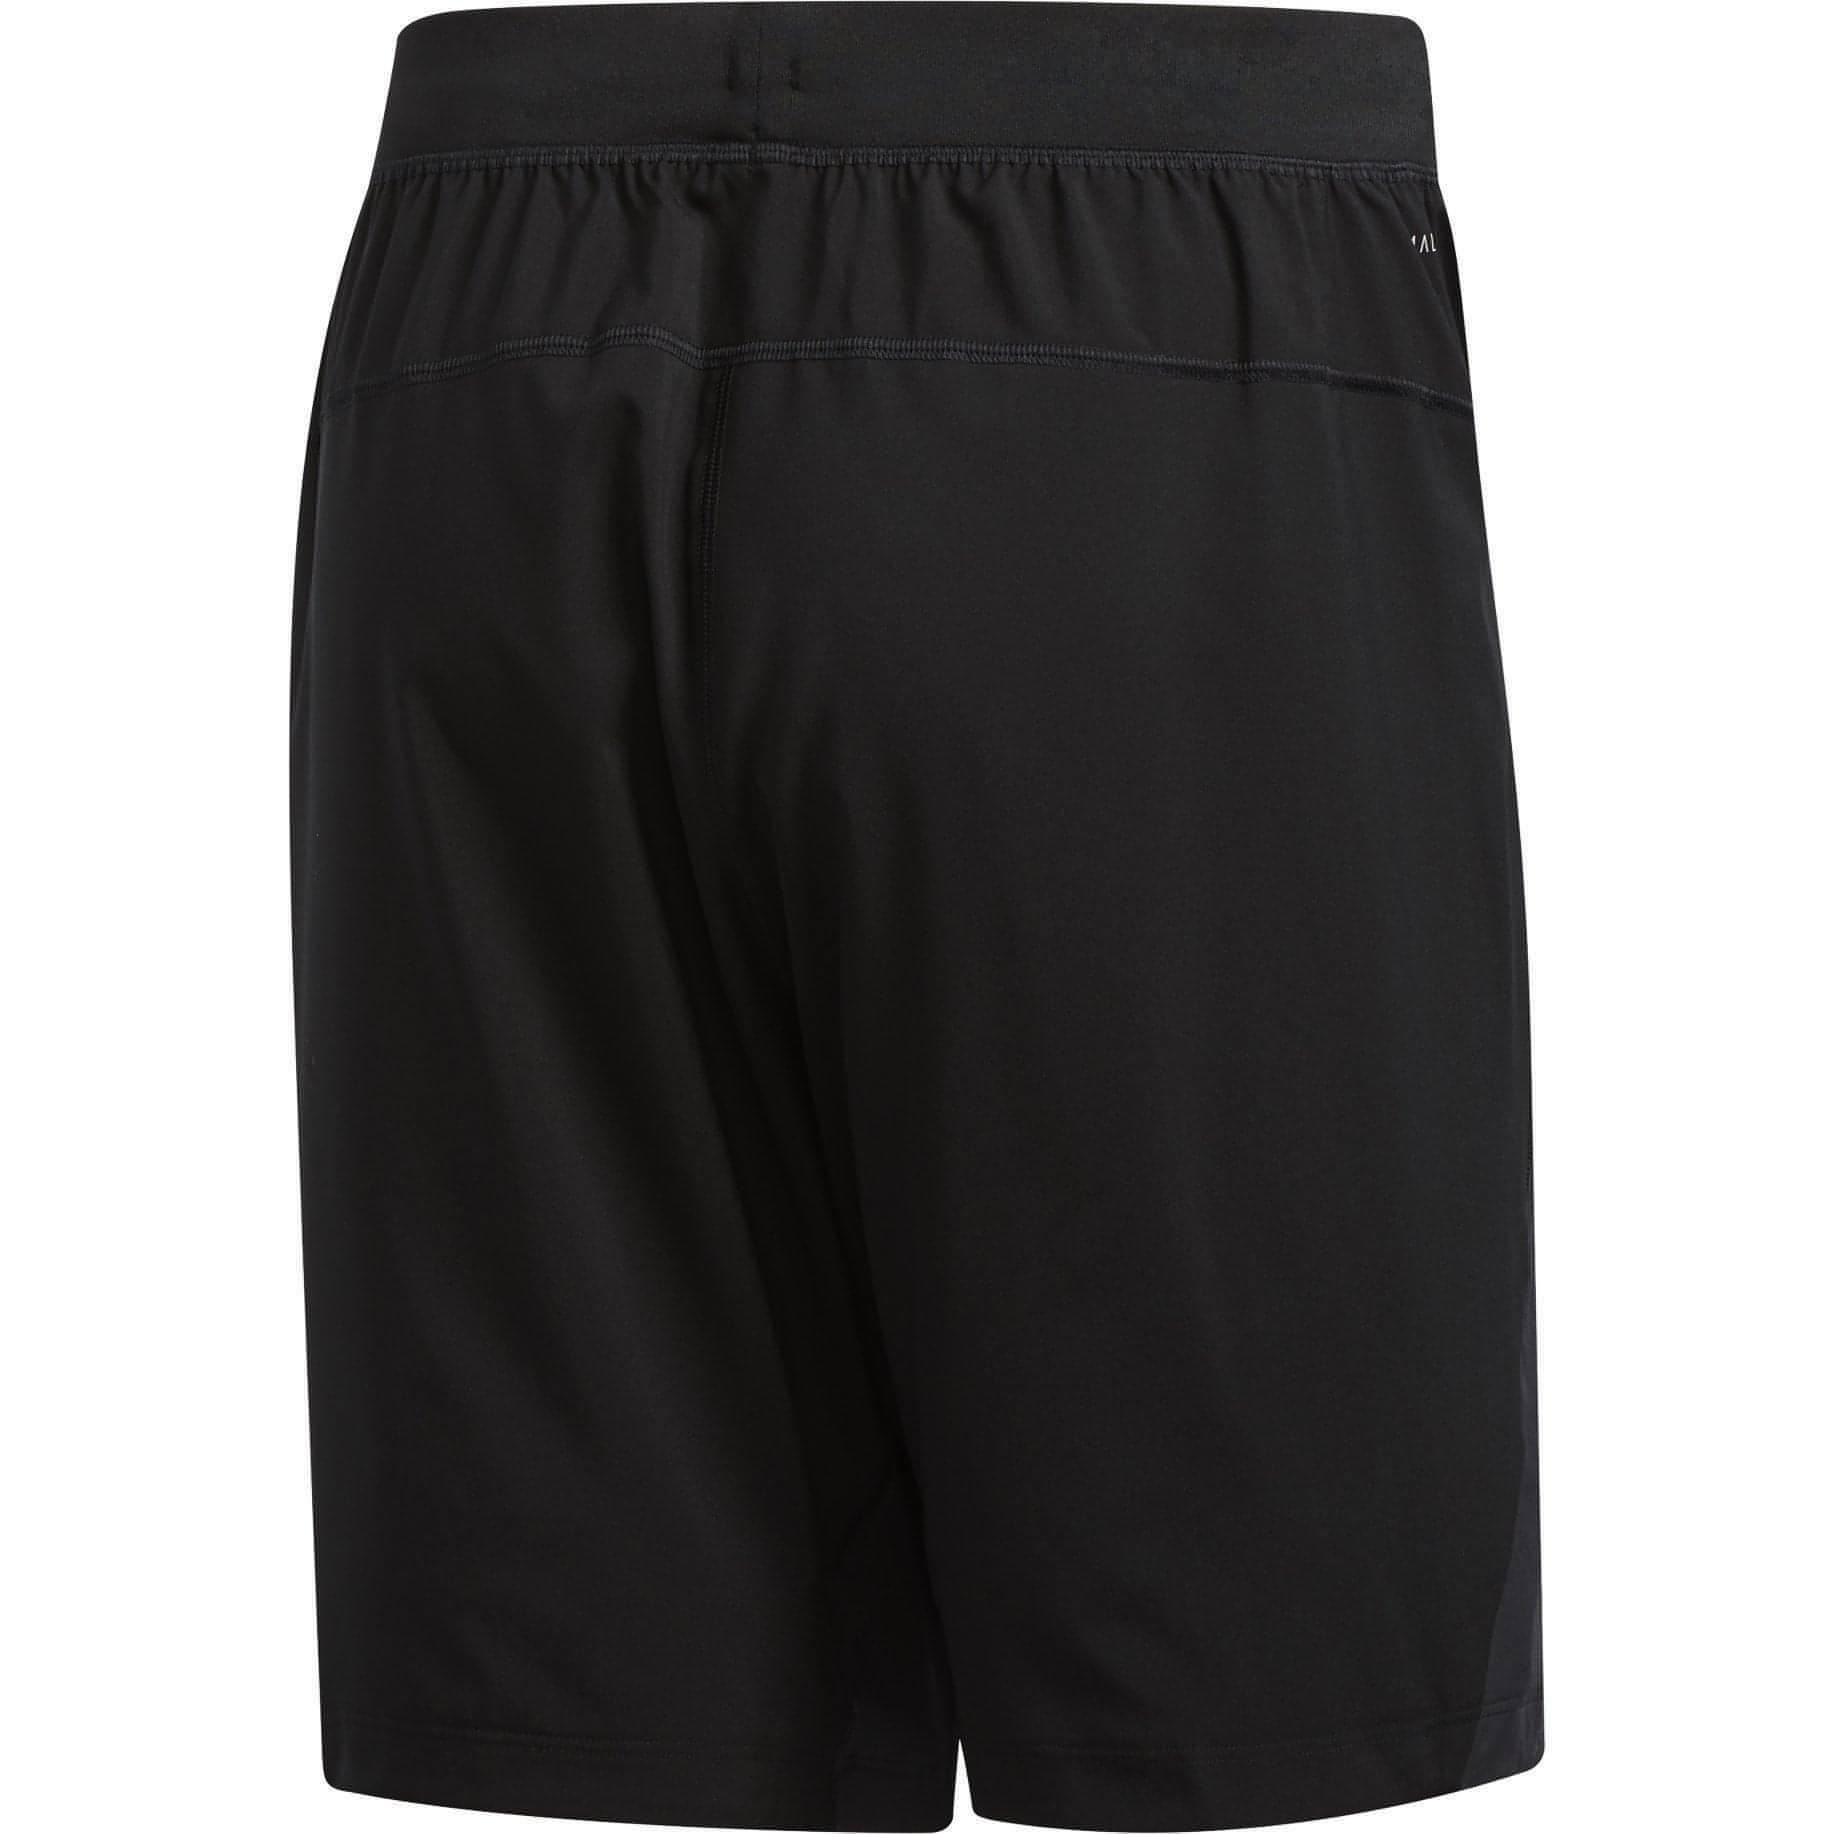 adidas 4KRFT Daily Press 20 Inch Mens Training Shorts - Black - Start Fitness